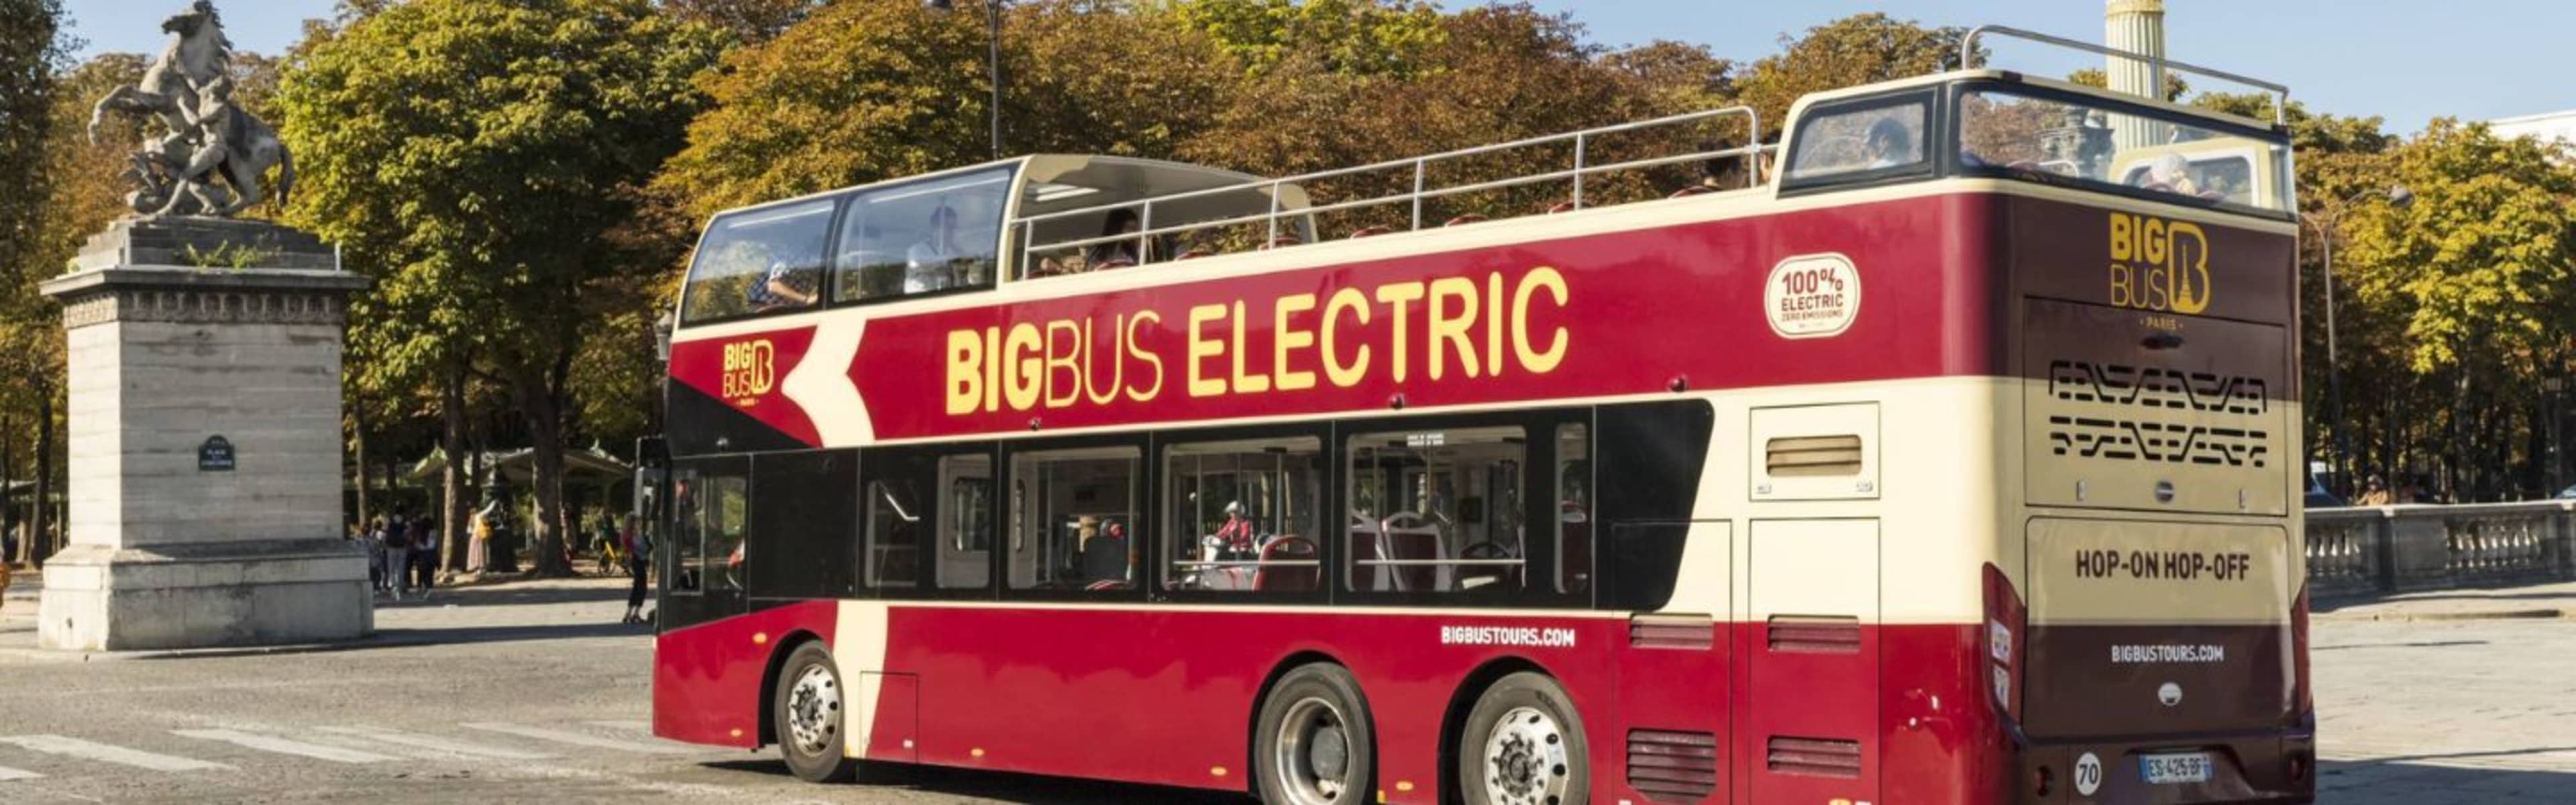 Big bus Paris electric